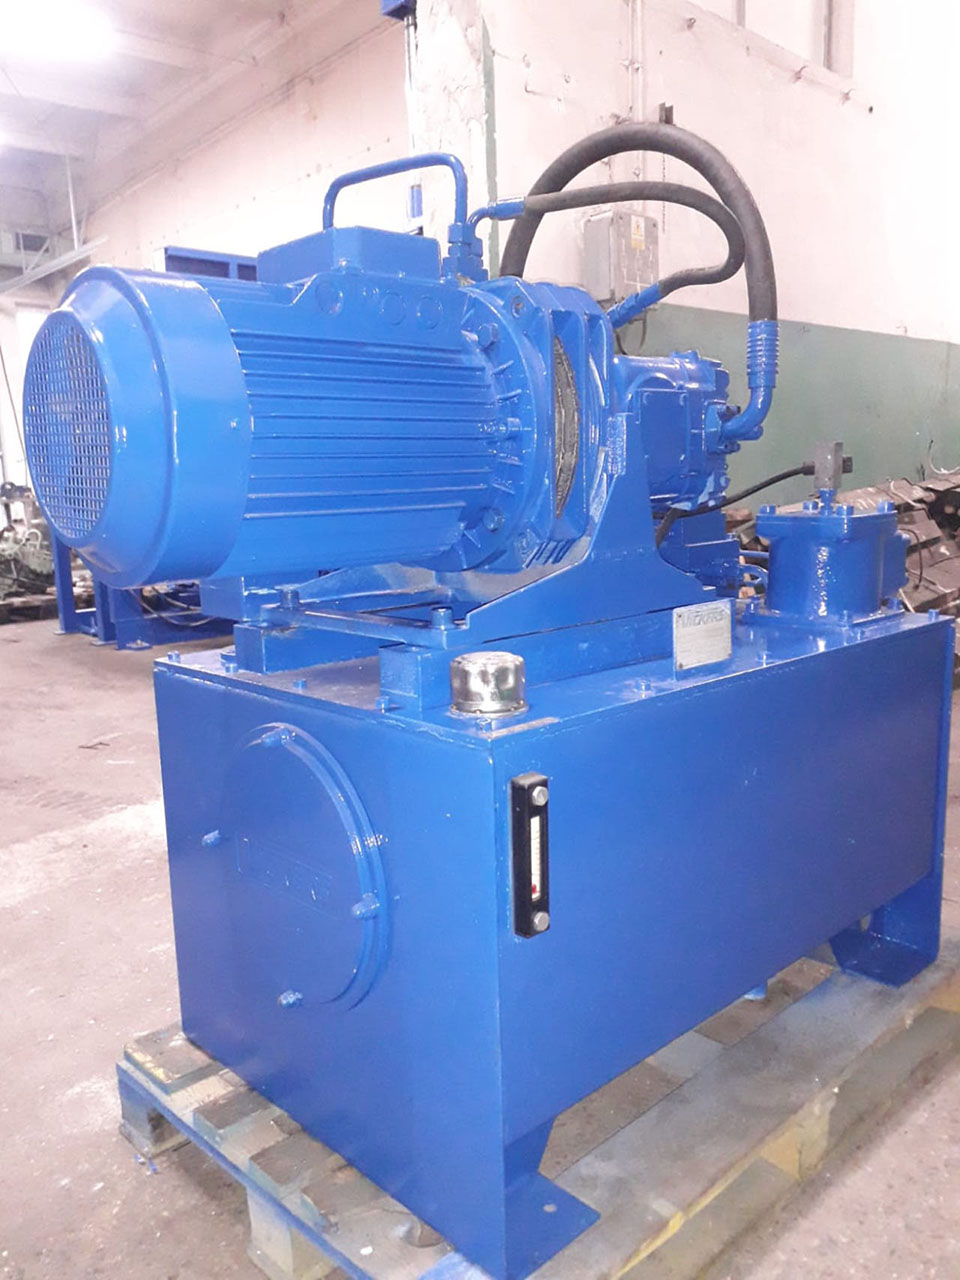 Vickers hydraulic power unit ZU2099, used